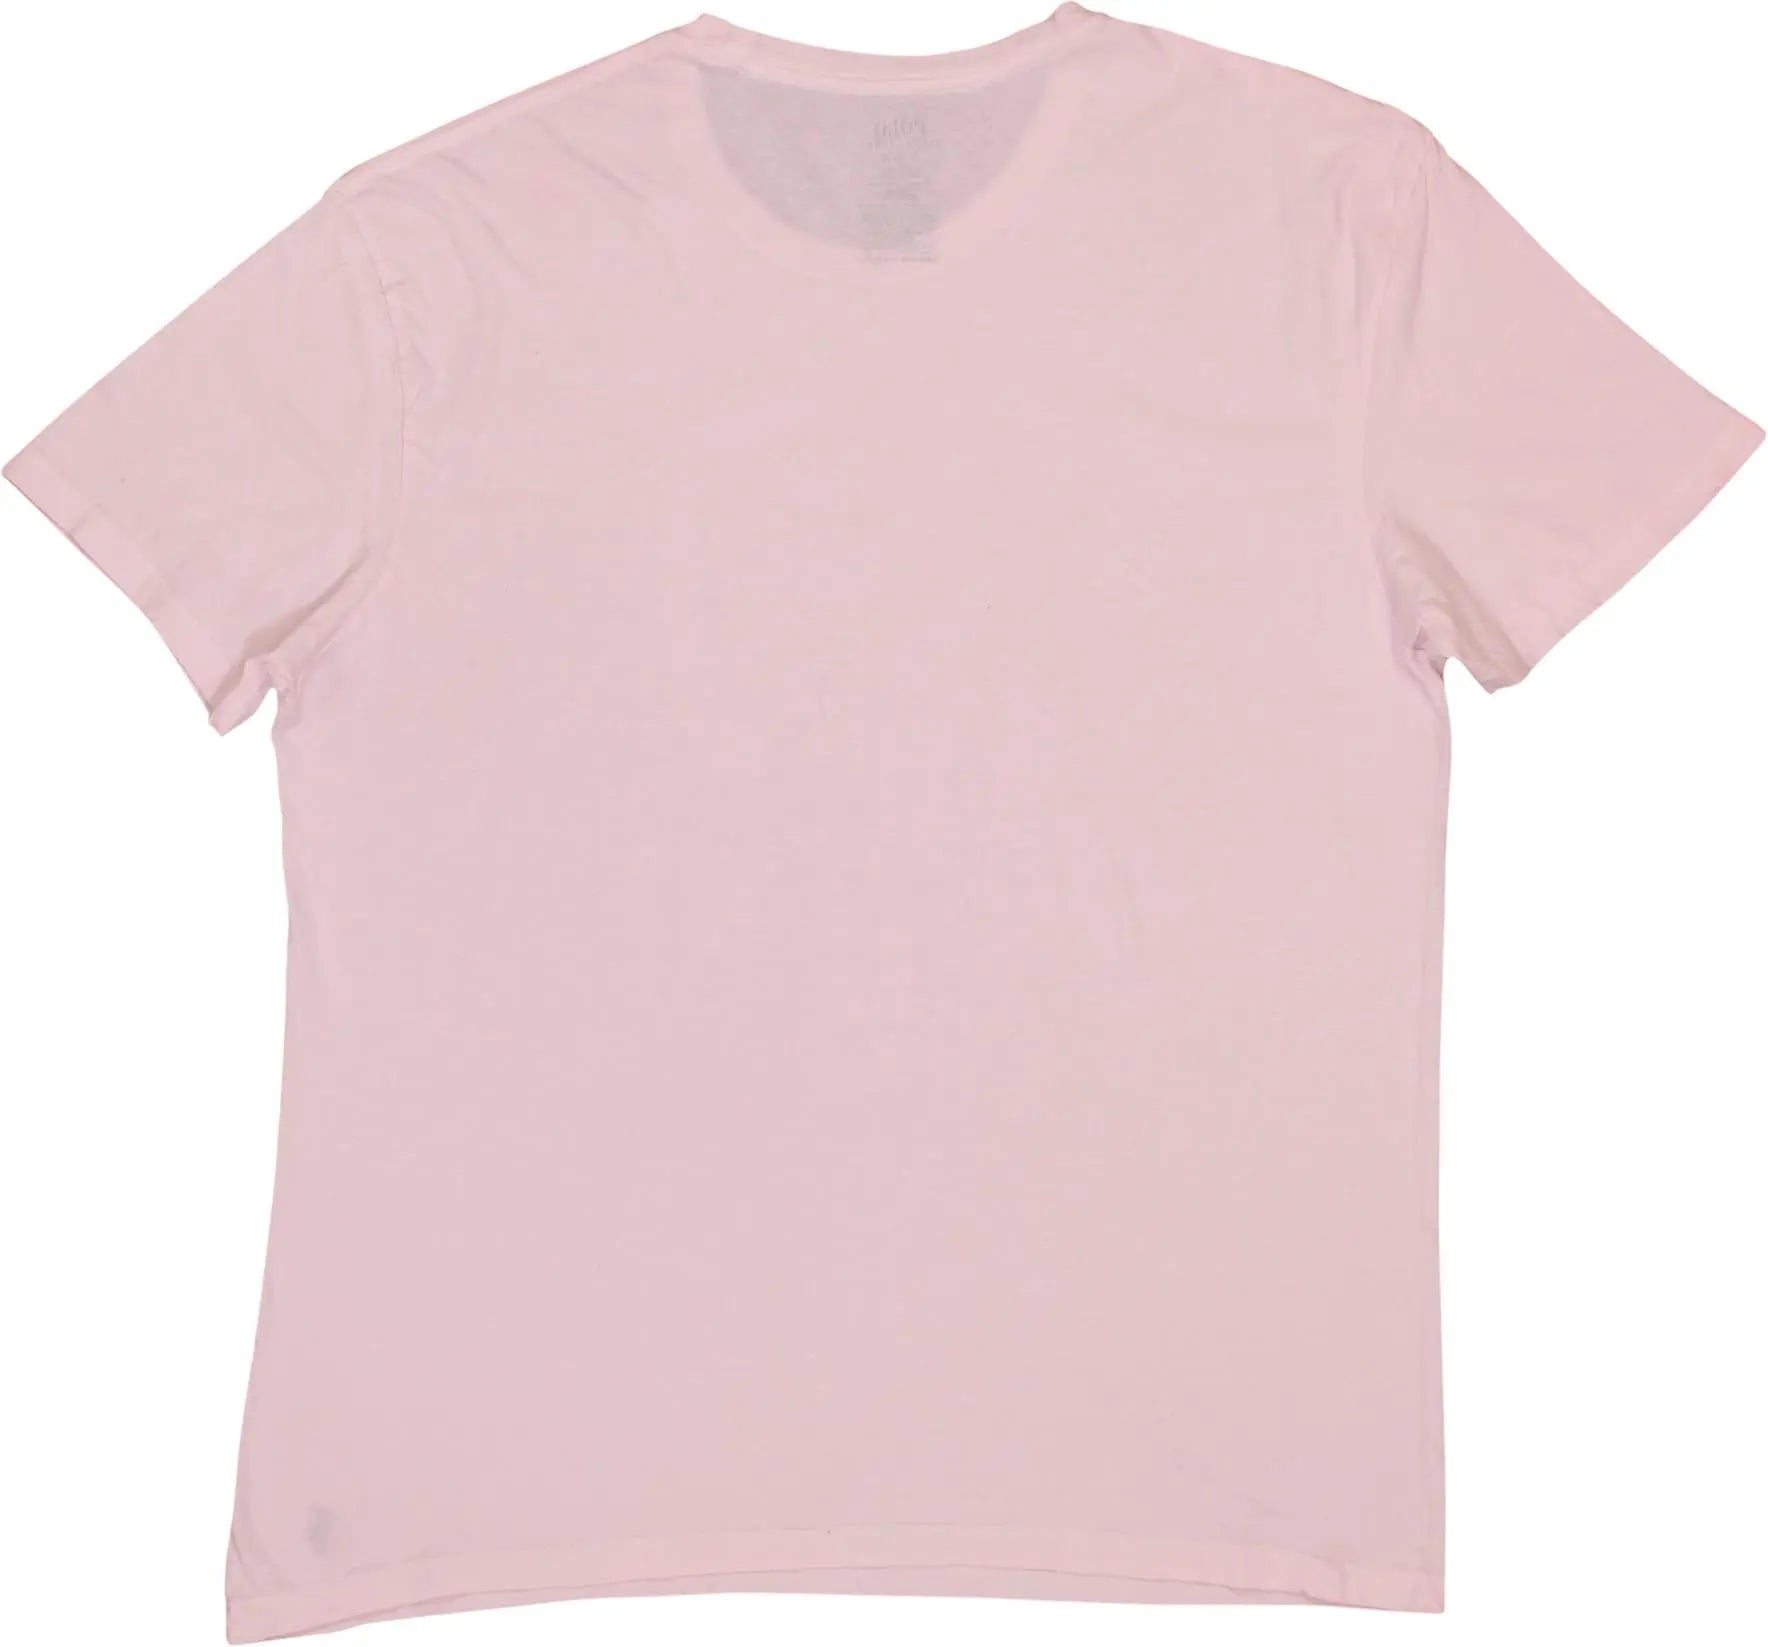 Ralph Lauren - Pink T-shirt by Ralph Lauren- ThriftTale.com - Vintage and second handclothing